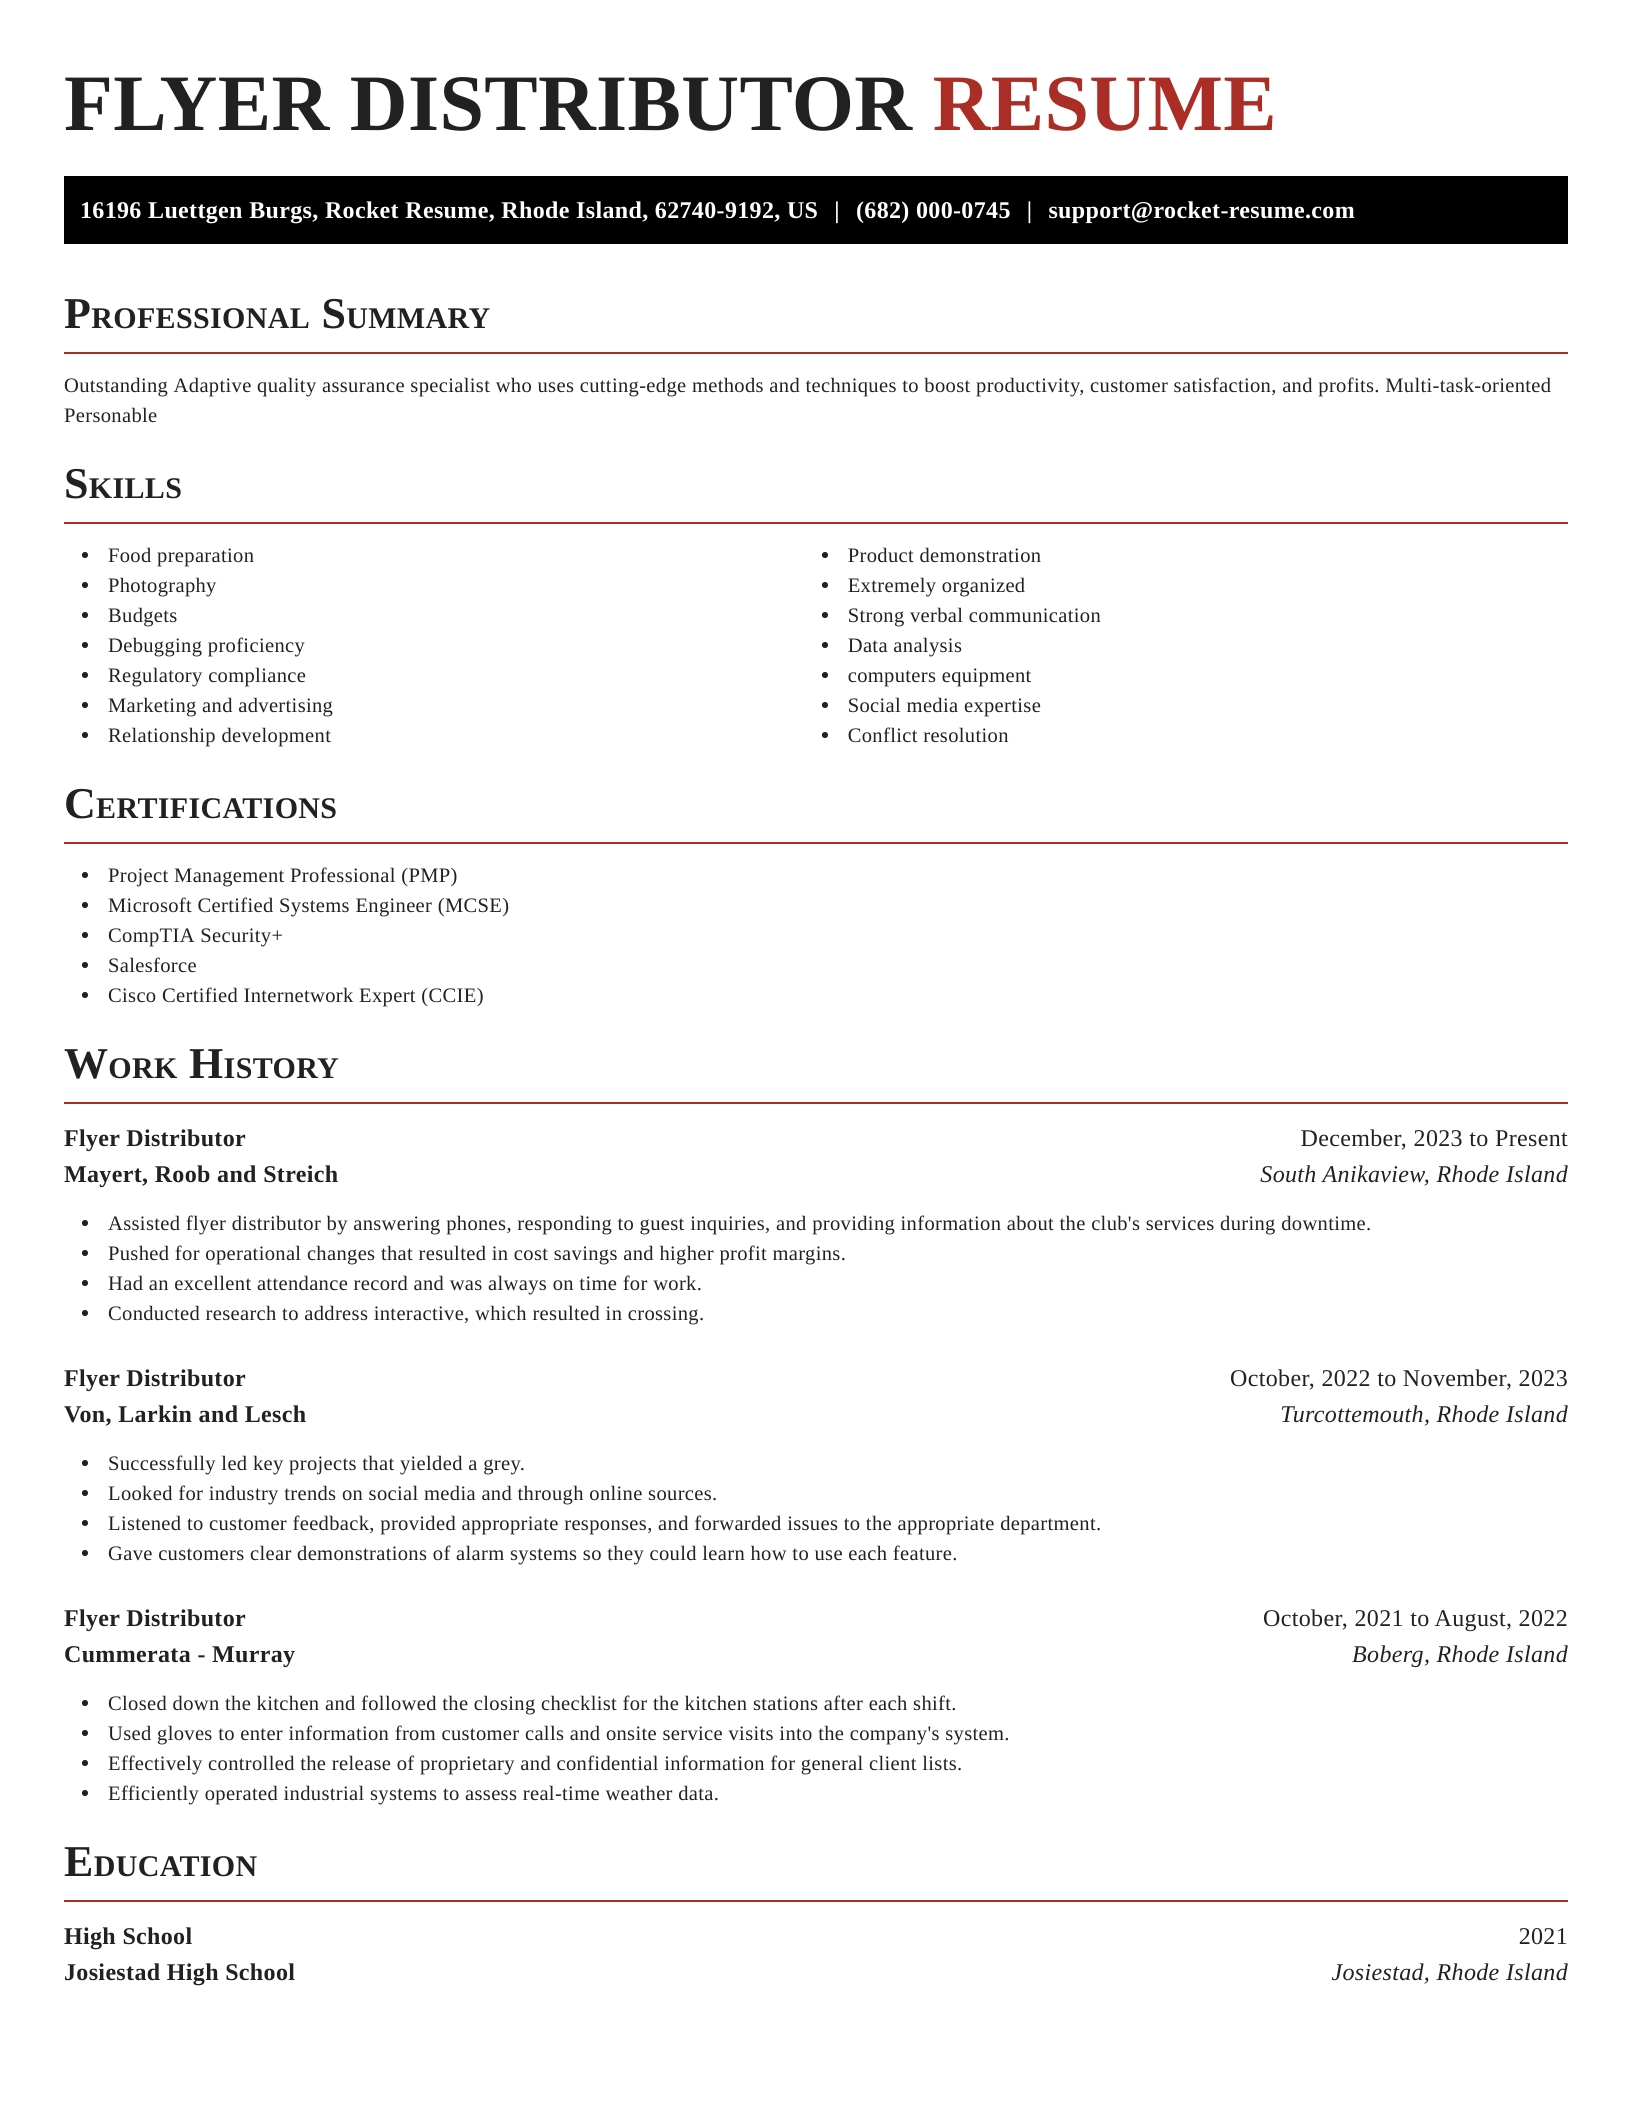 Distributor resume